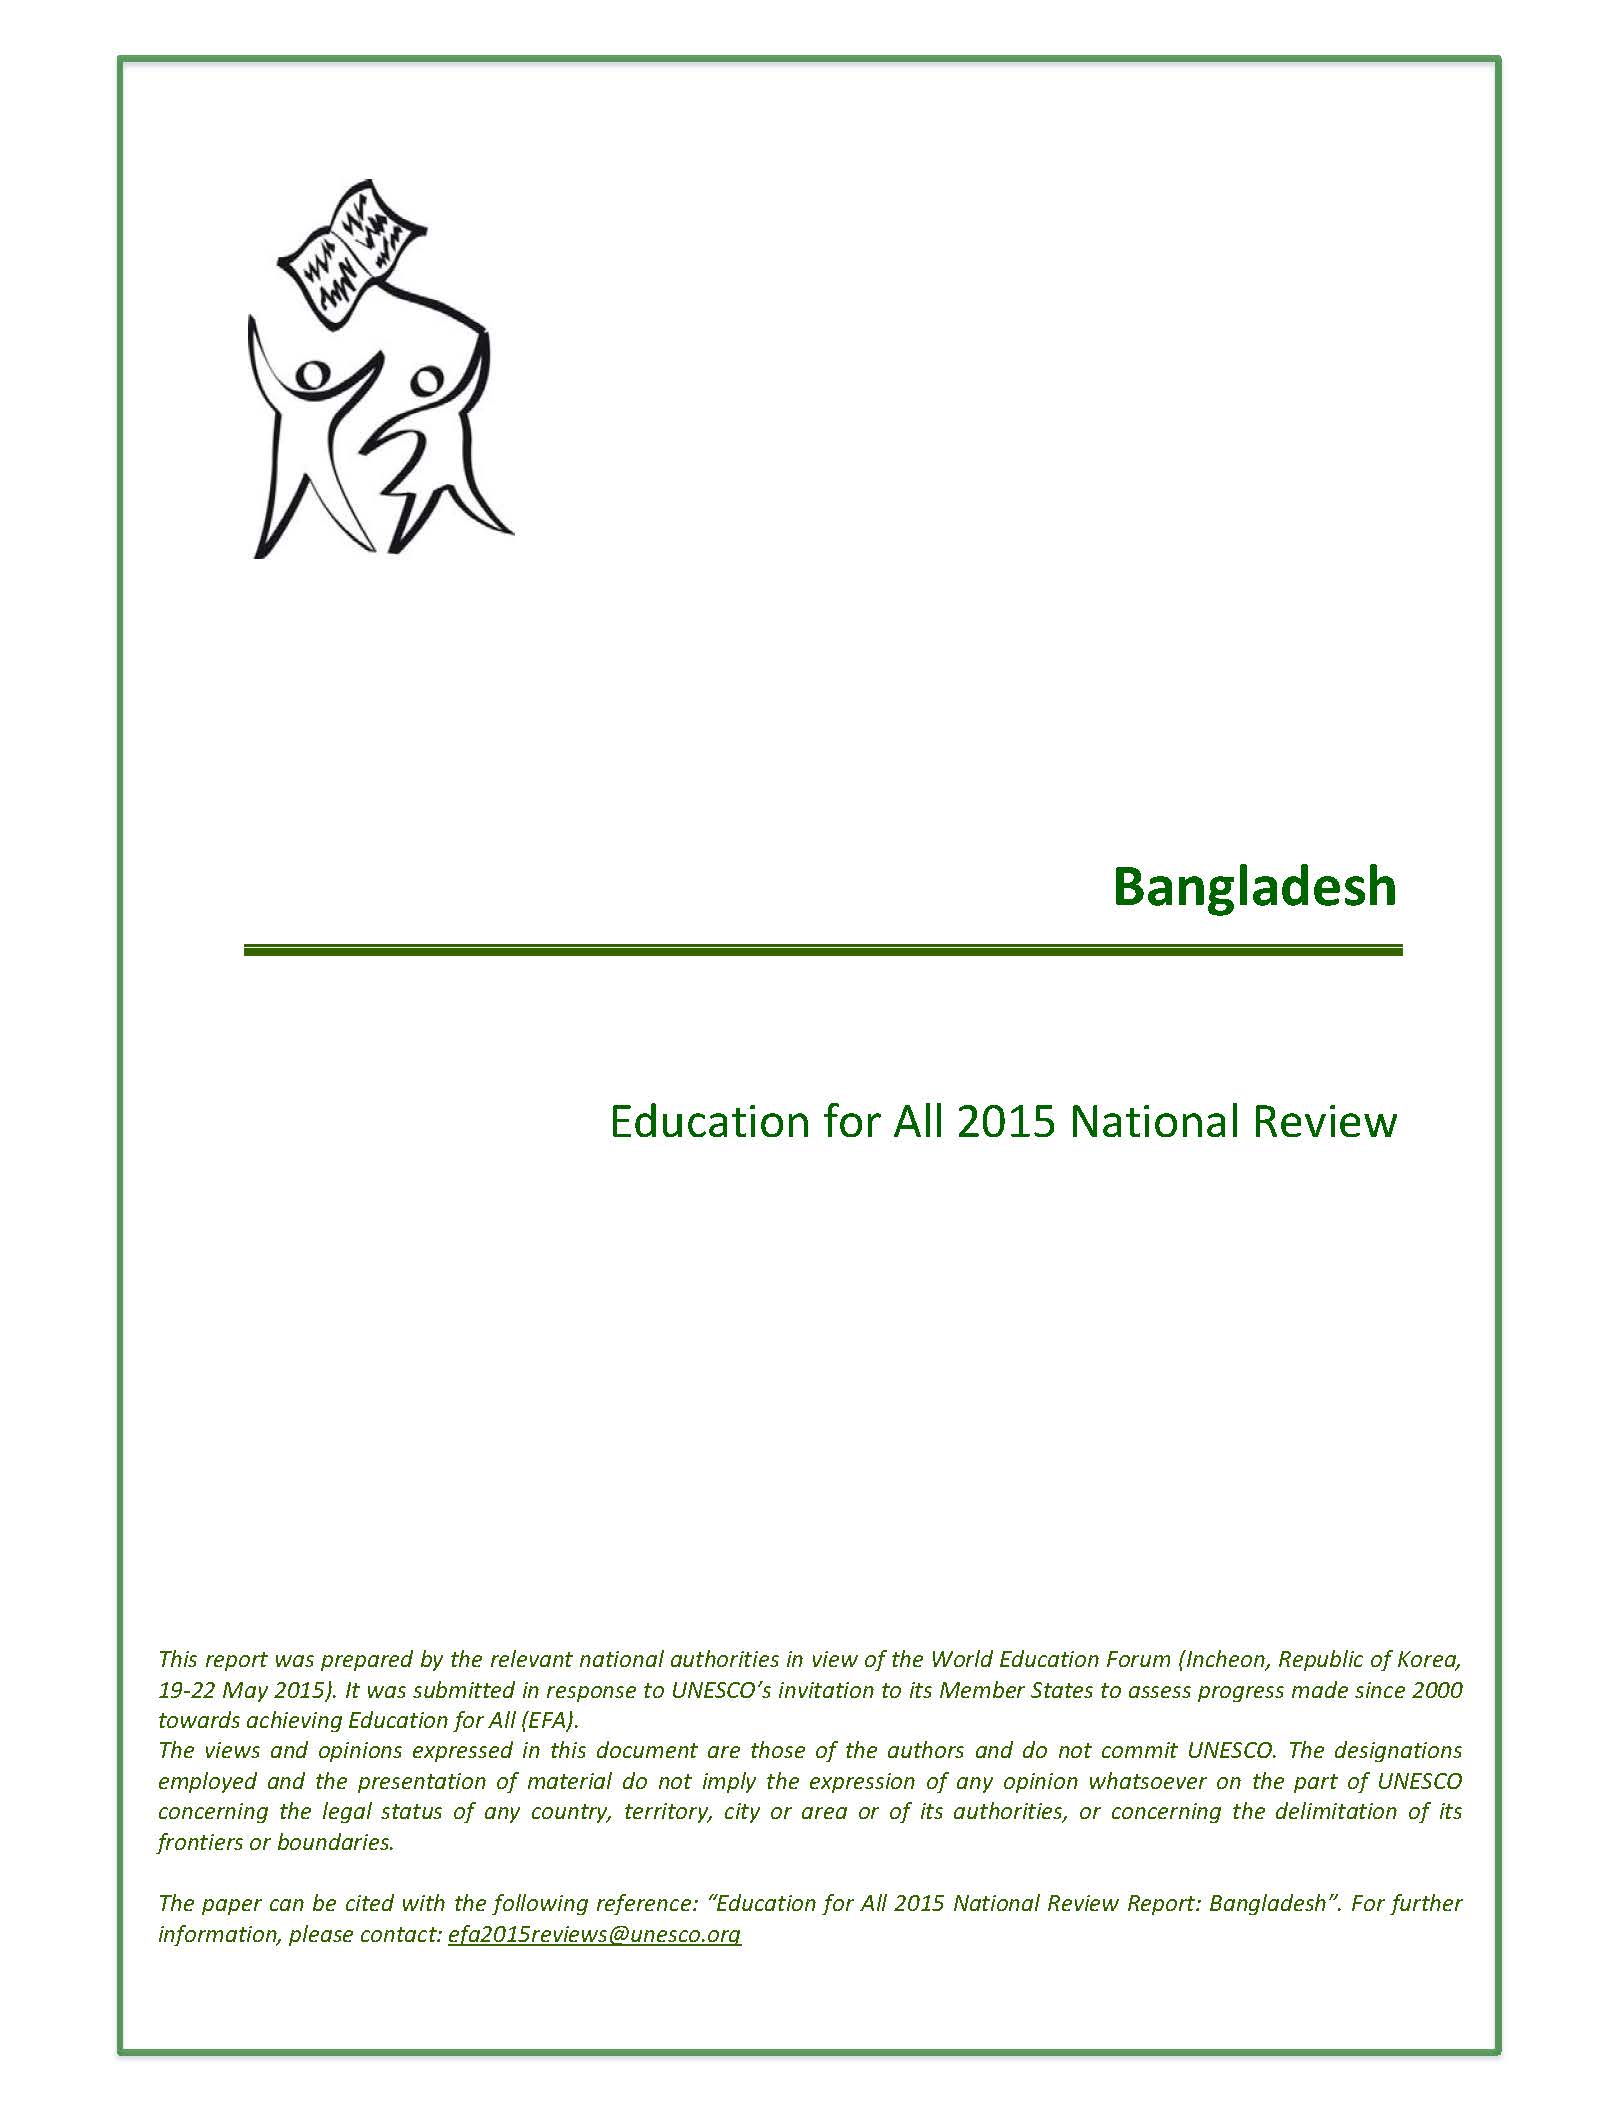 EFA 2015 National Review